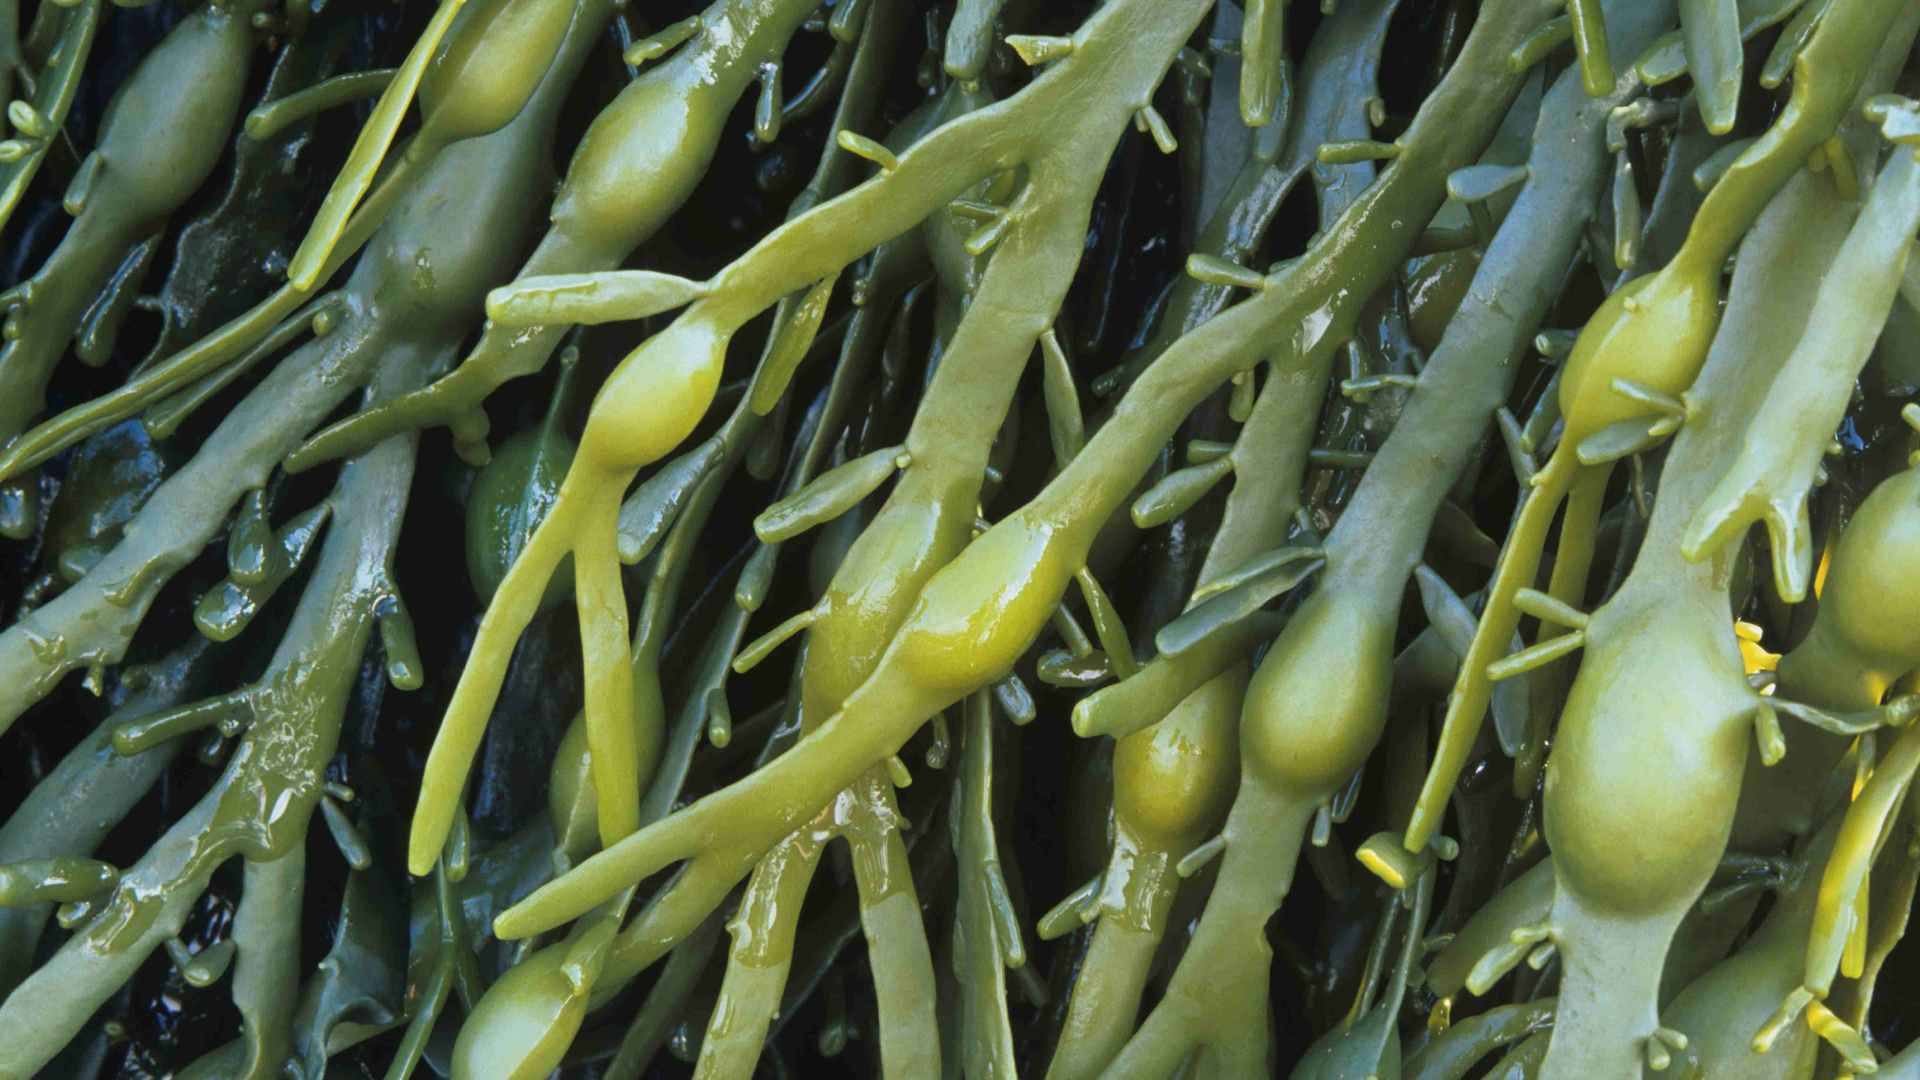 Canadian company Acadian Plant Health presents the algae "Ascophyllum nodosum" to the Brazilian market